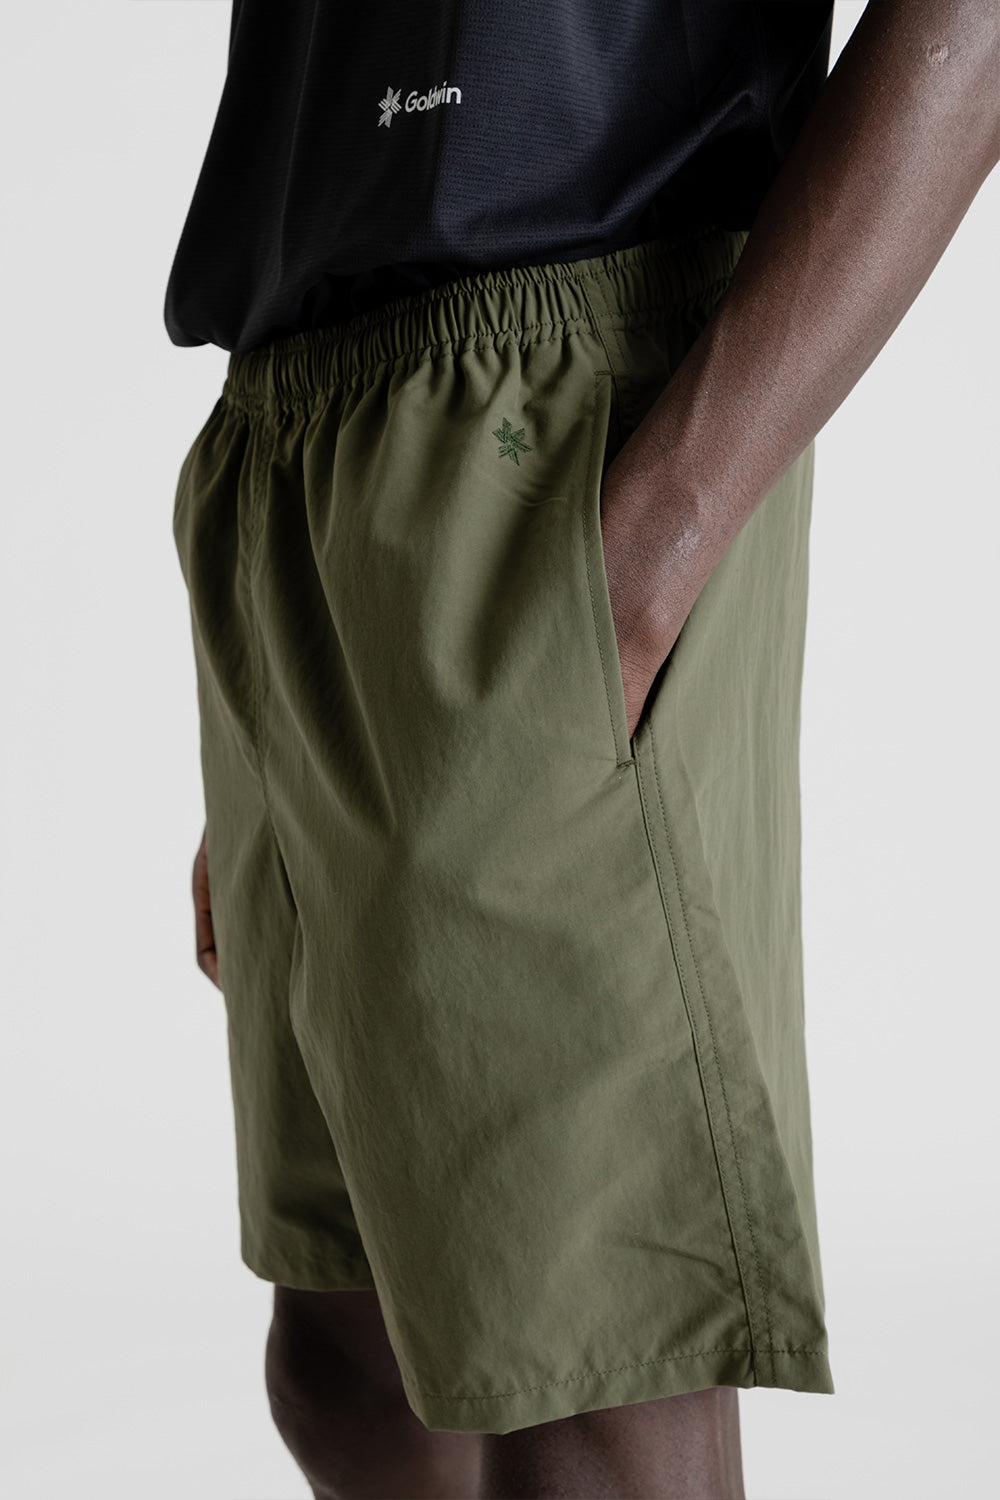 NEW特価 M Nylon Shorts (GREEN) グリーン エンノイ 定番HOT